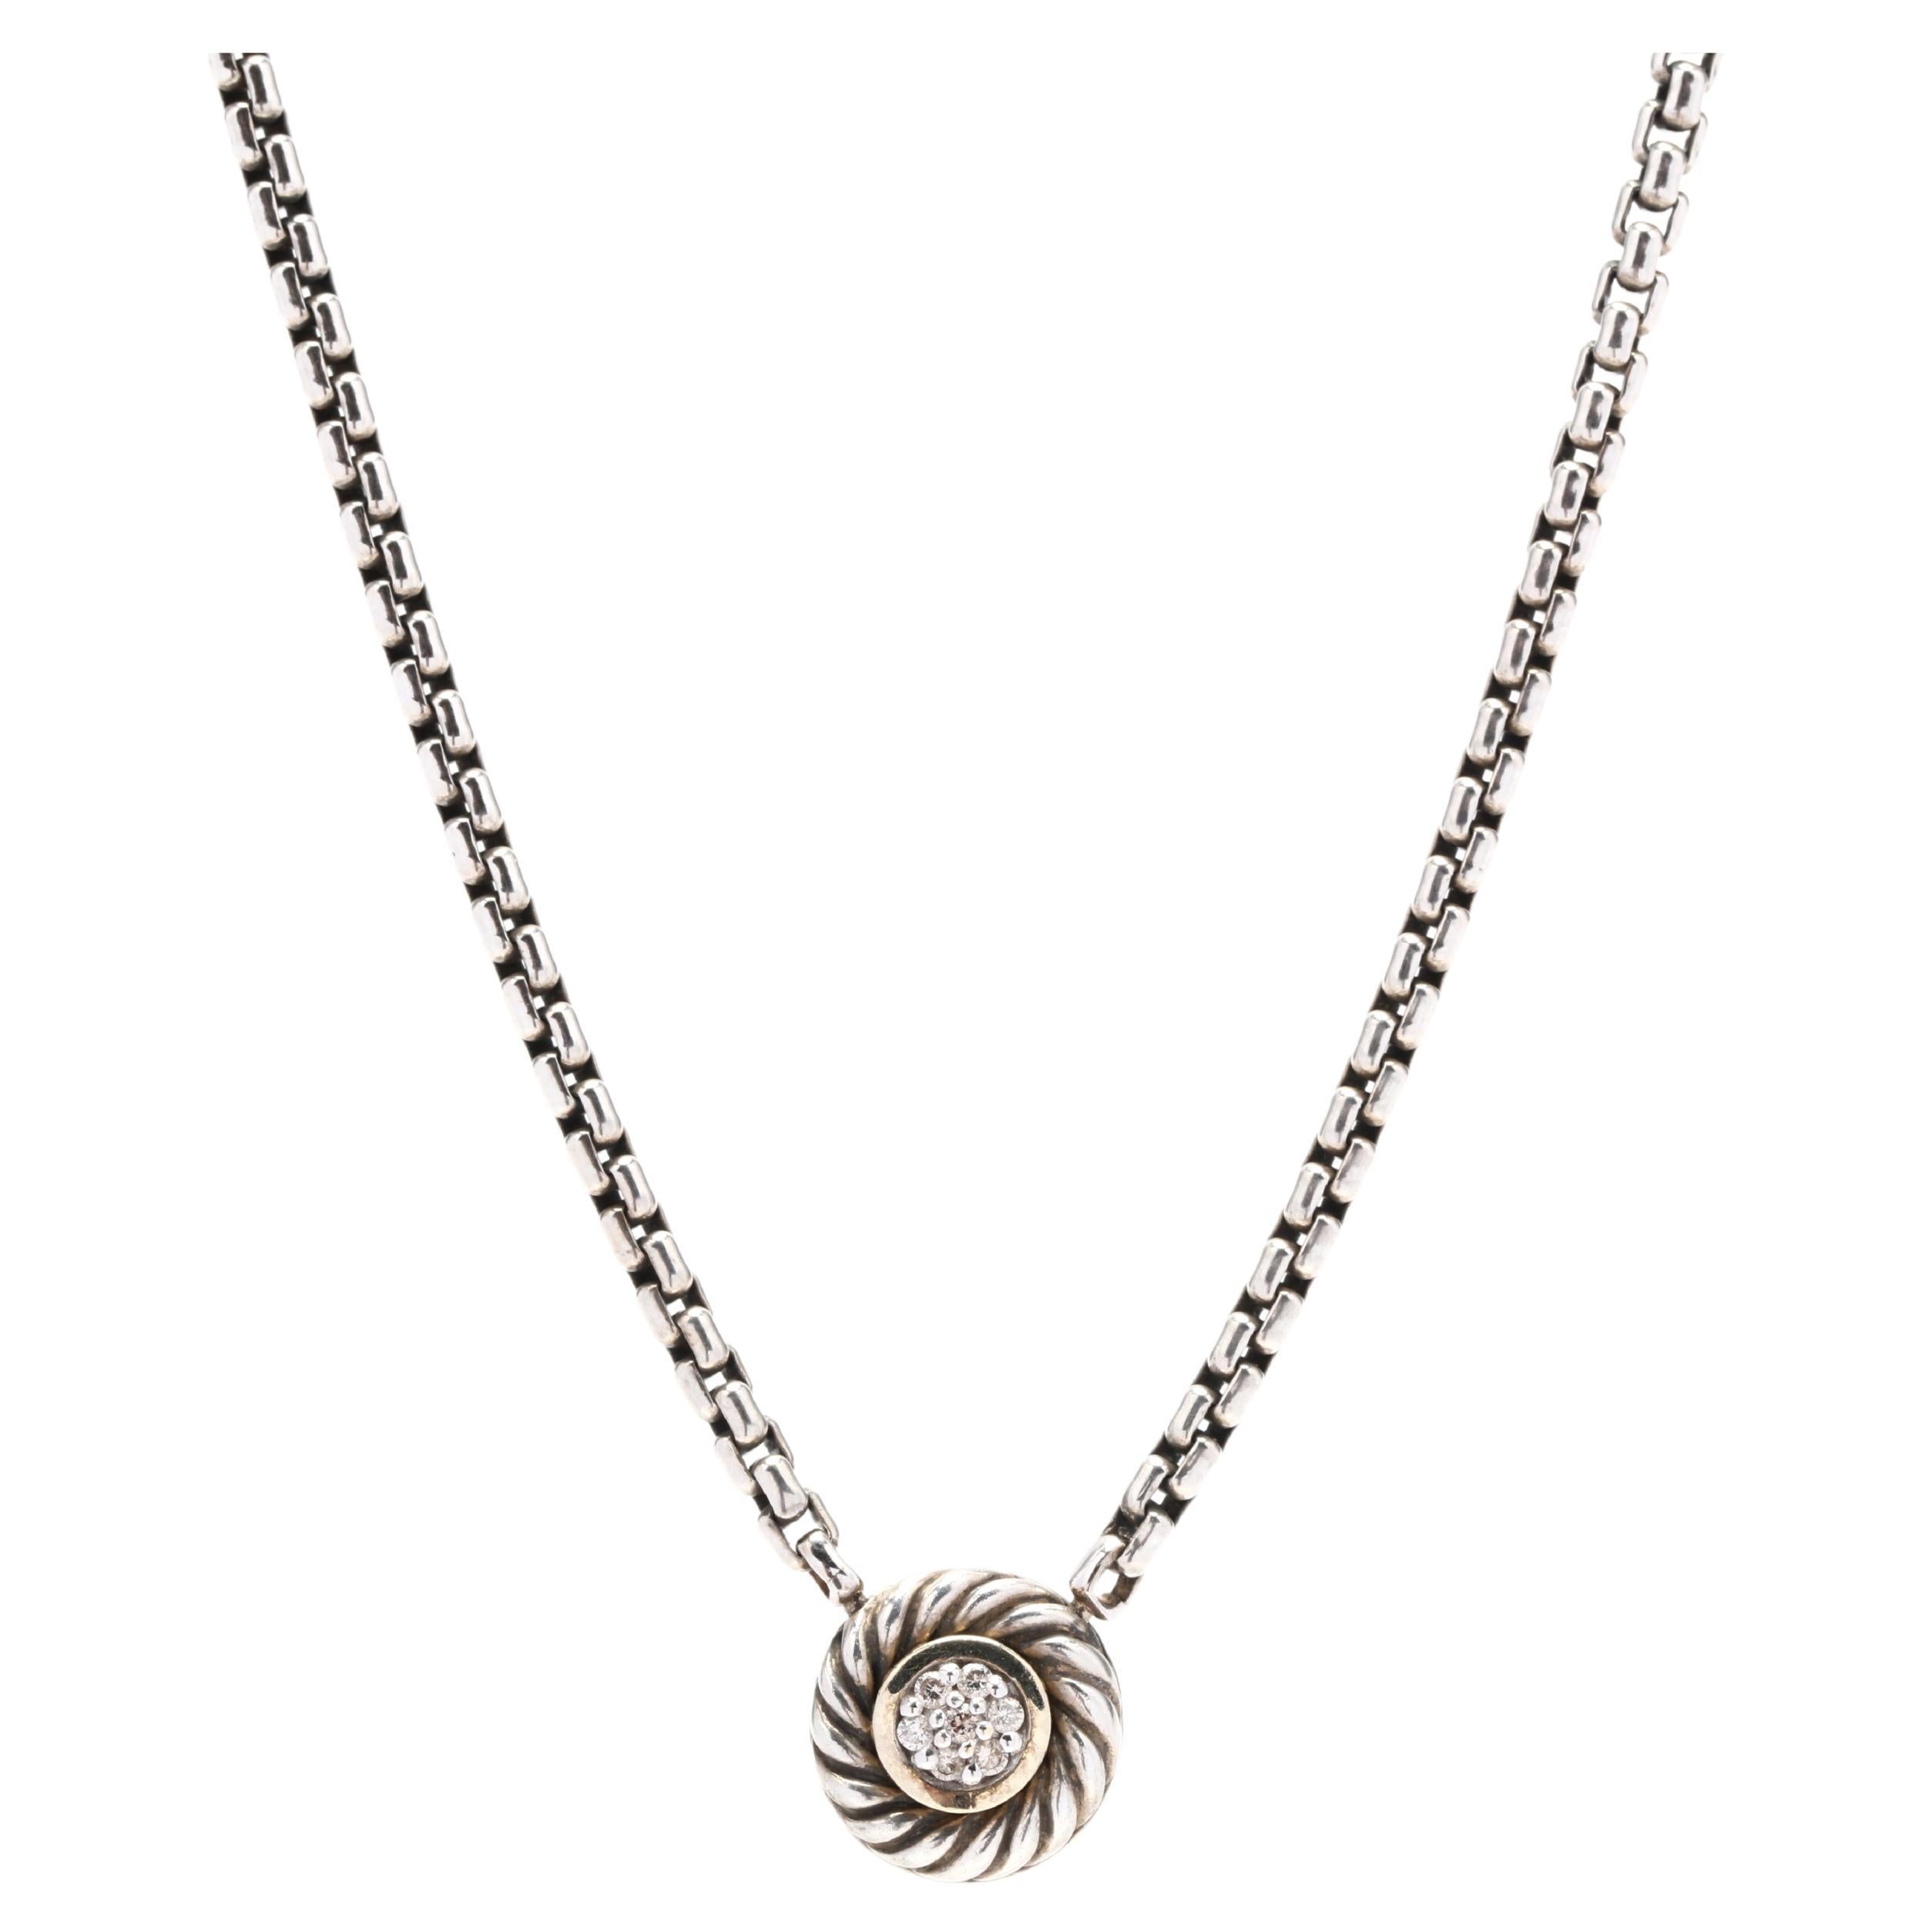 David Yurman Diamond Pendant Necklace, Sterling Silver 18k White Gold, 18 Inches